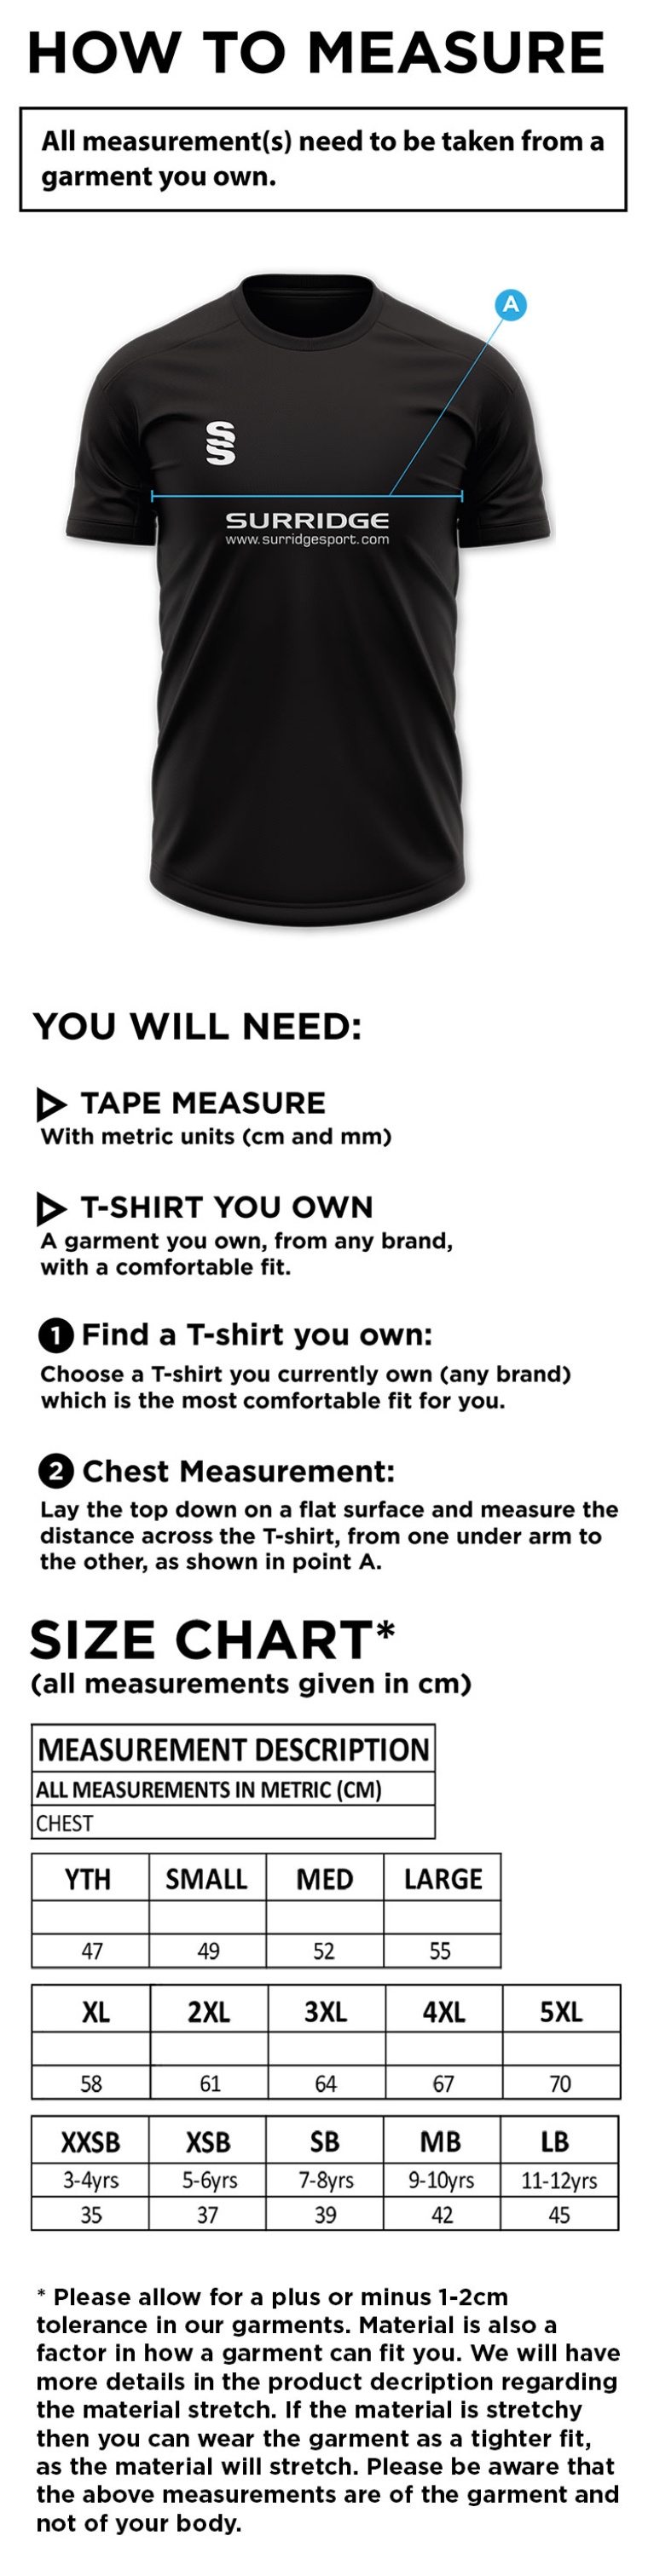 Phoenix HC - Blade Polo Shirt - Size Guide